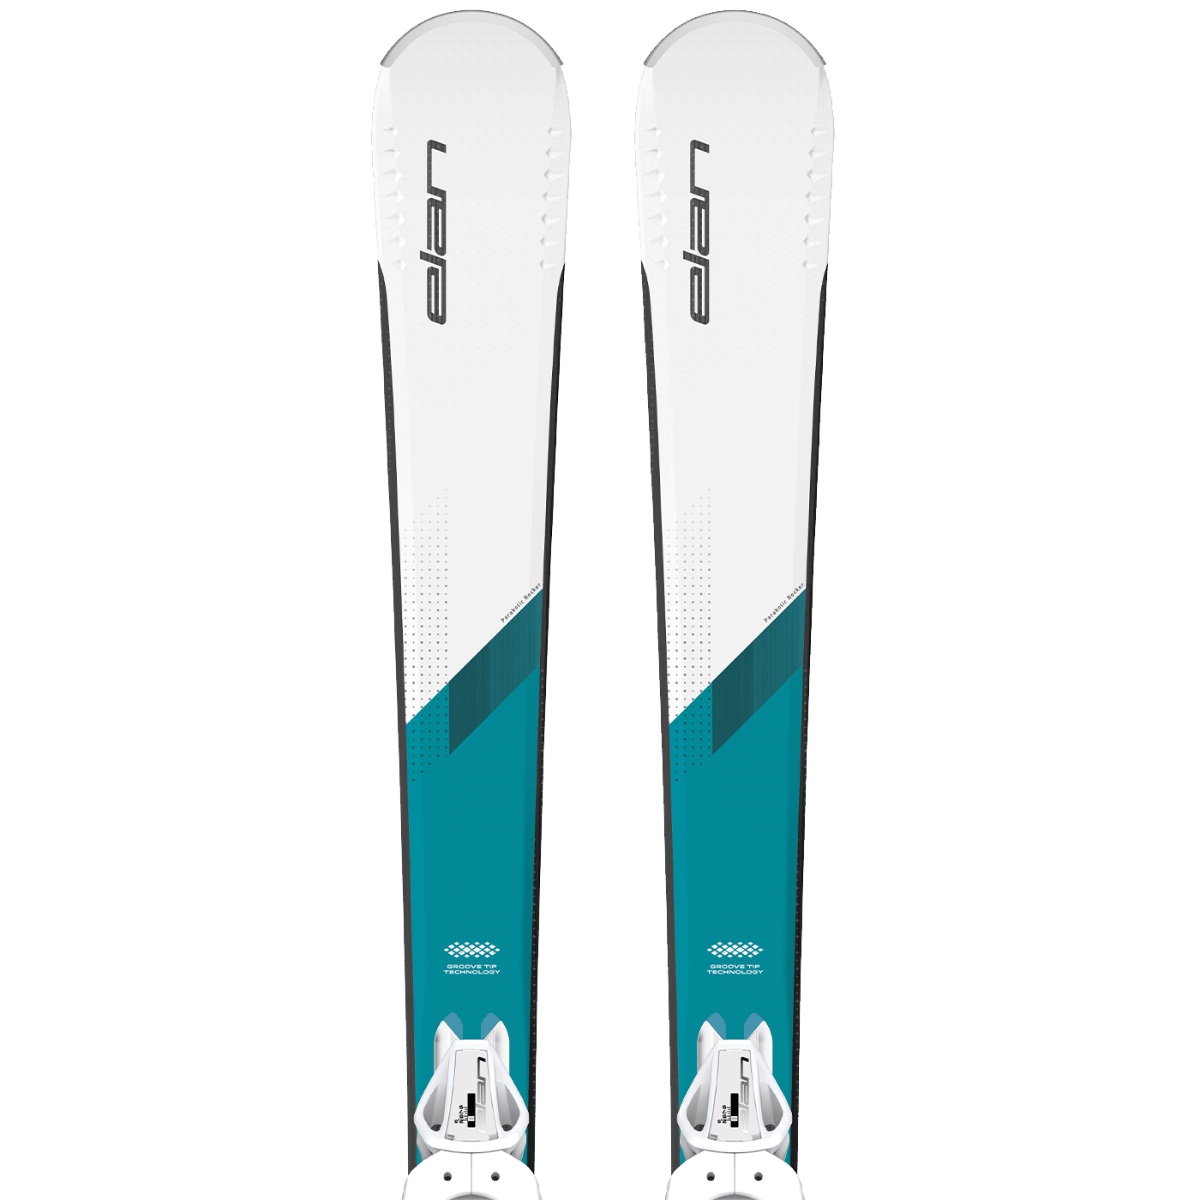 Горные лыжи Elan Smu White Magic Lightshift + Elw 9 Shift 2021, blue/white, 146 см